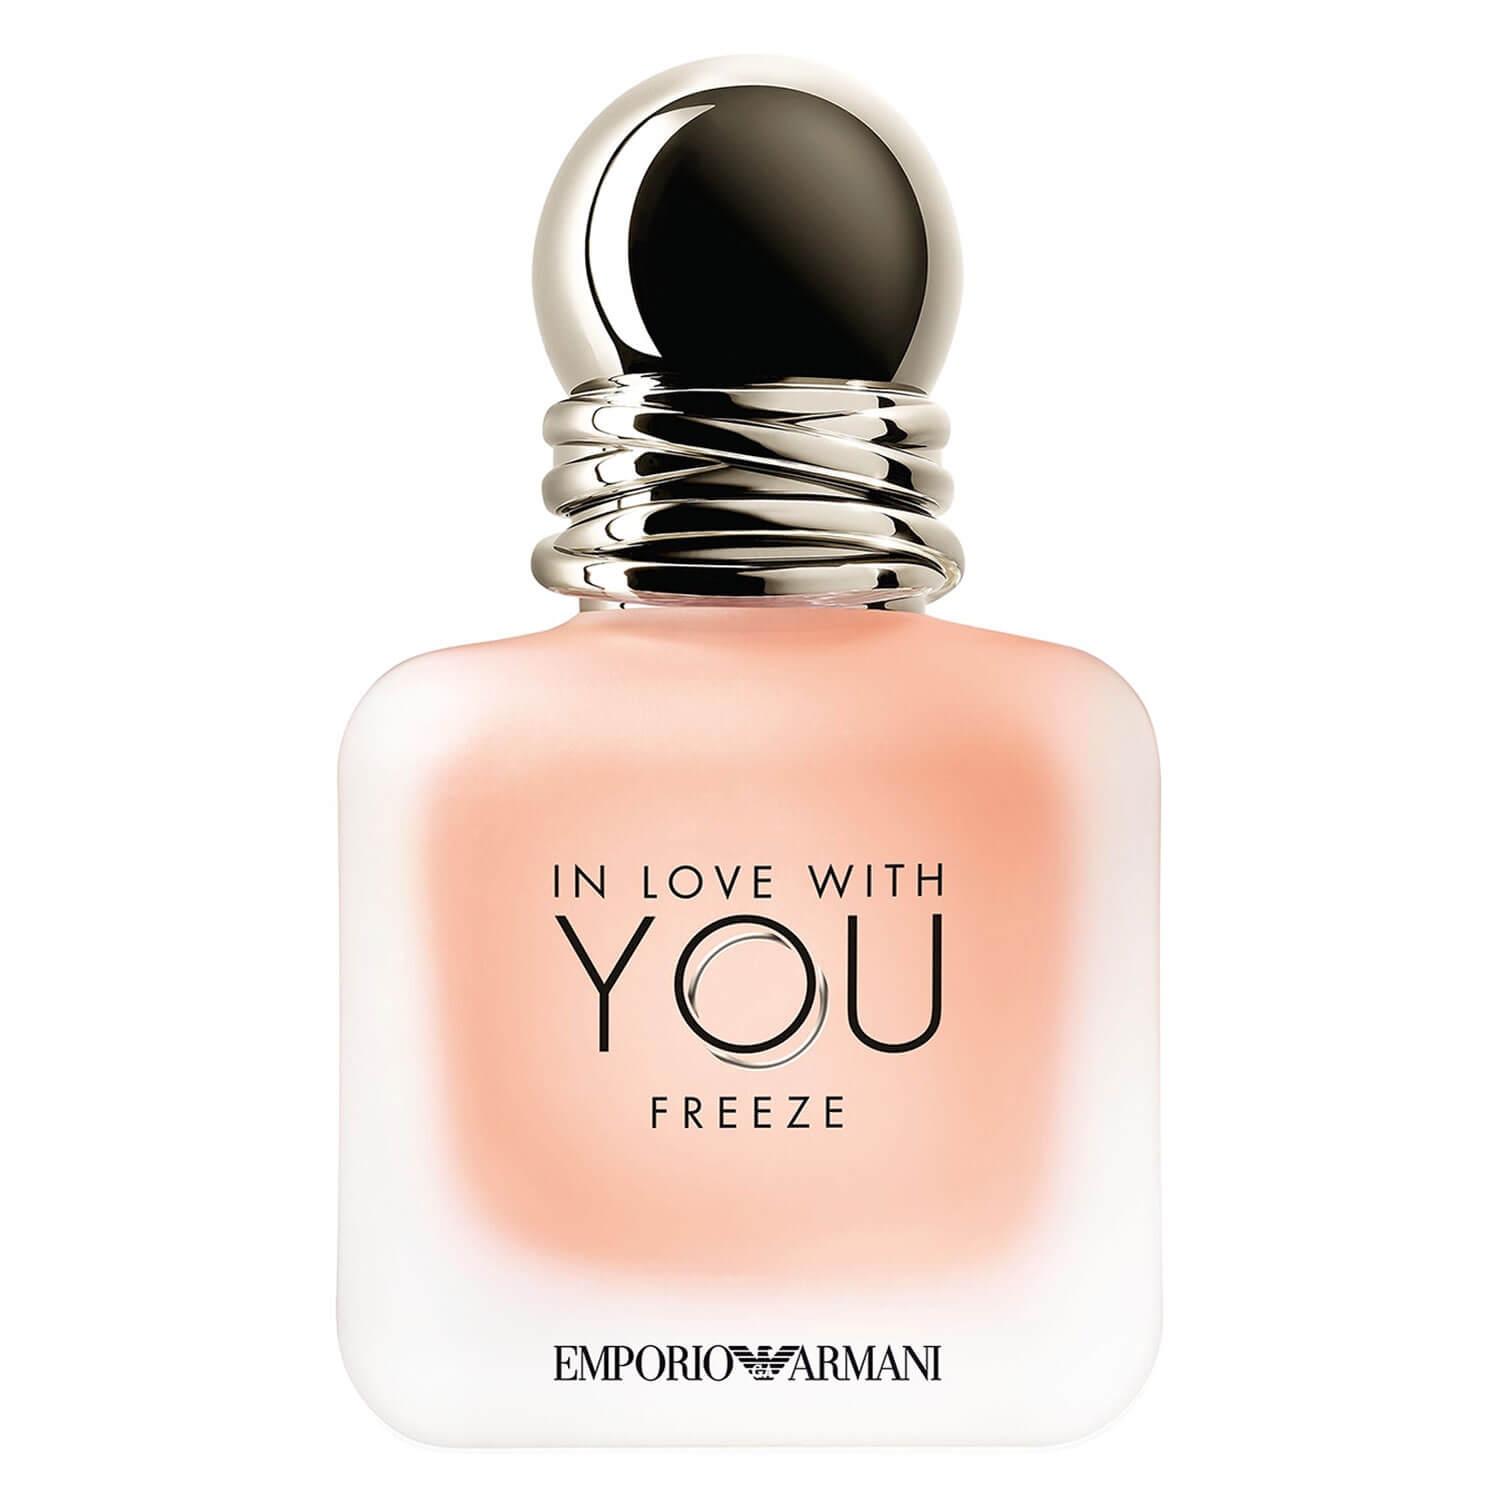 Produktbild von Emporio Armani - In Love With You Freeze Eau de Parfum